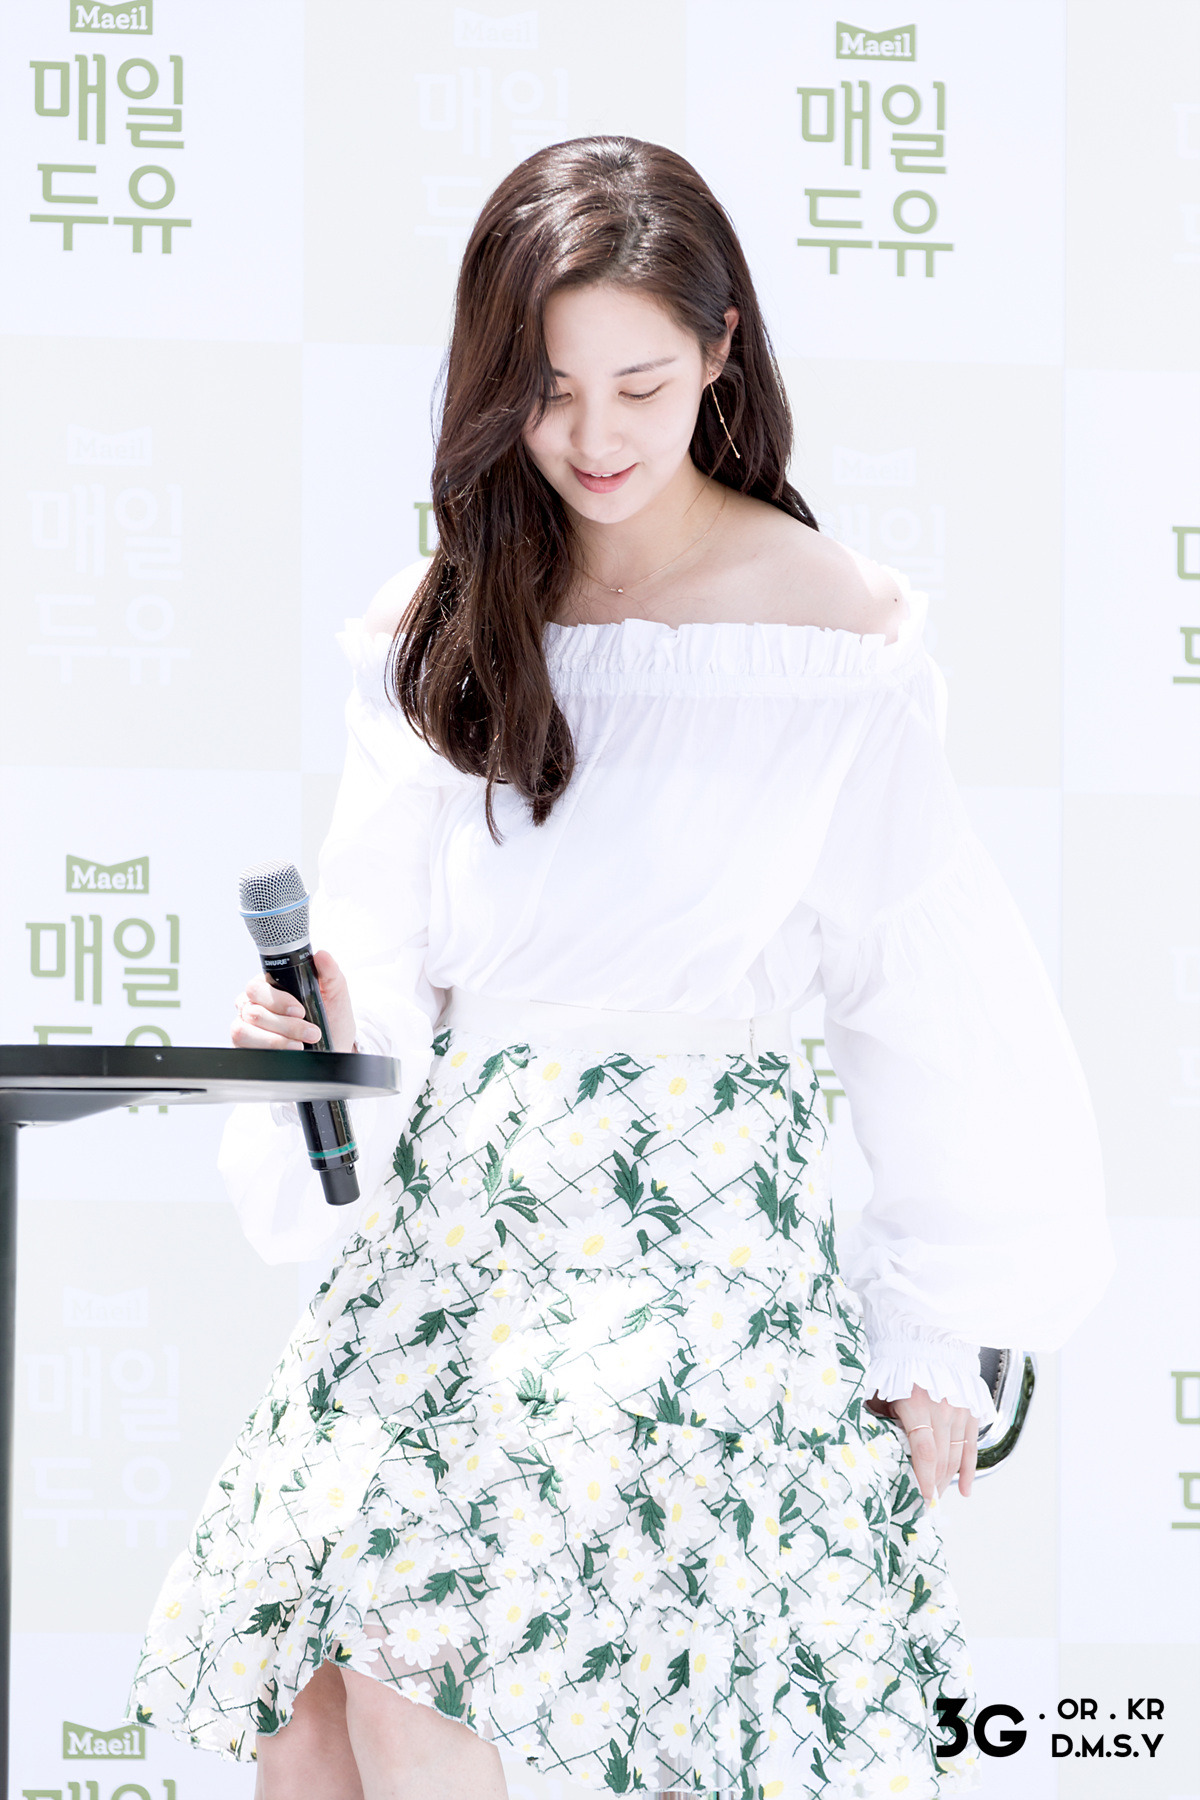  [PIC][03-06-2017]SeoHyun tham dự sự kiện “City Forestival - Maeil Duyou 'Confidence Diary'” vào chiều nay - Page 3 2657CE45593E8F0837CA33